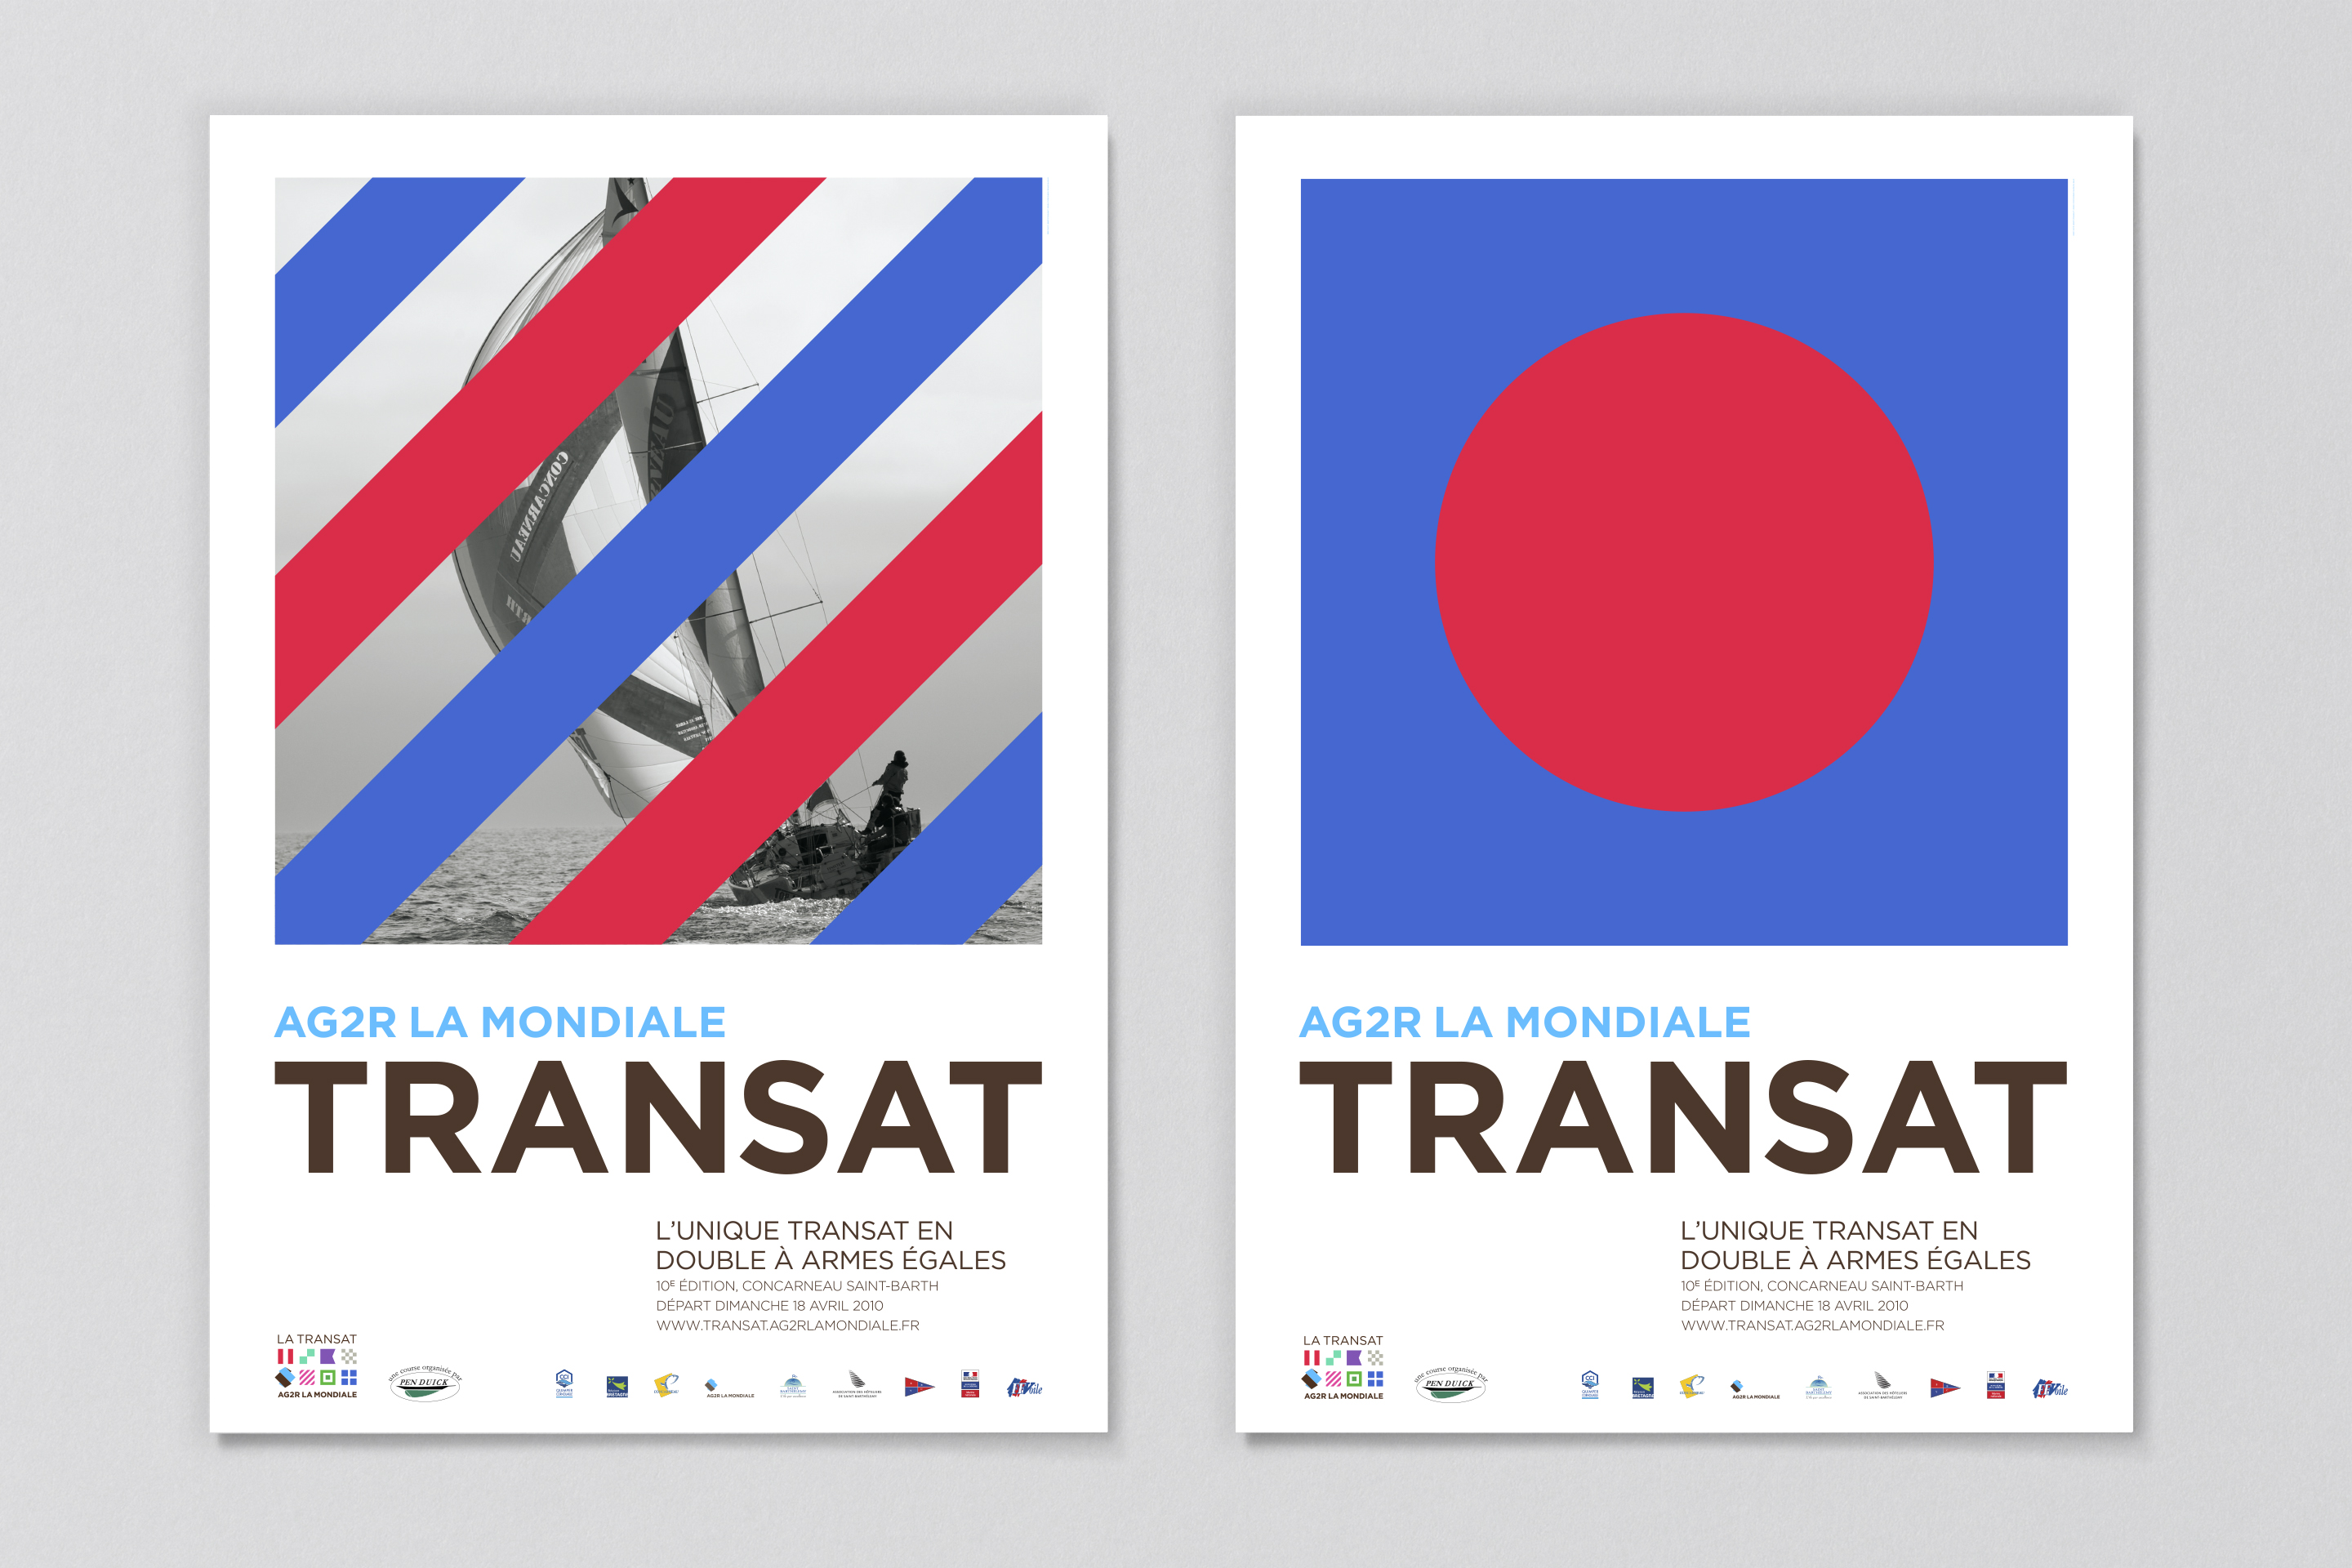 studio dumbar design visual brand identity AG2R LA MONDIALE French insurance company Transat sailing poster design